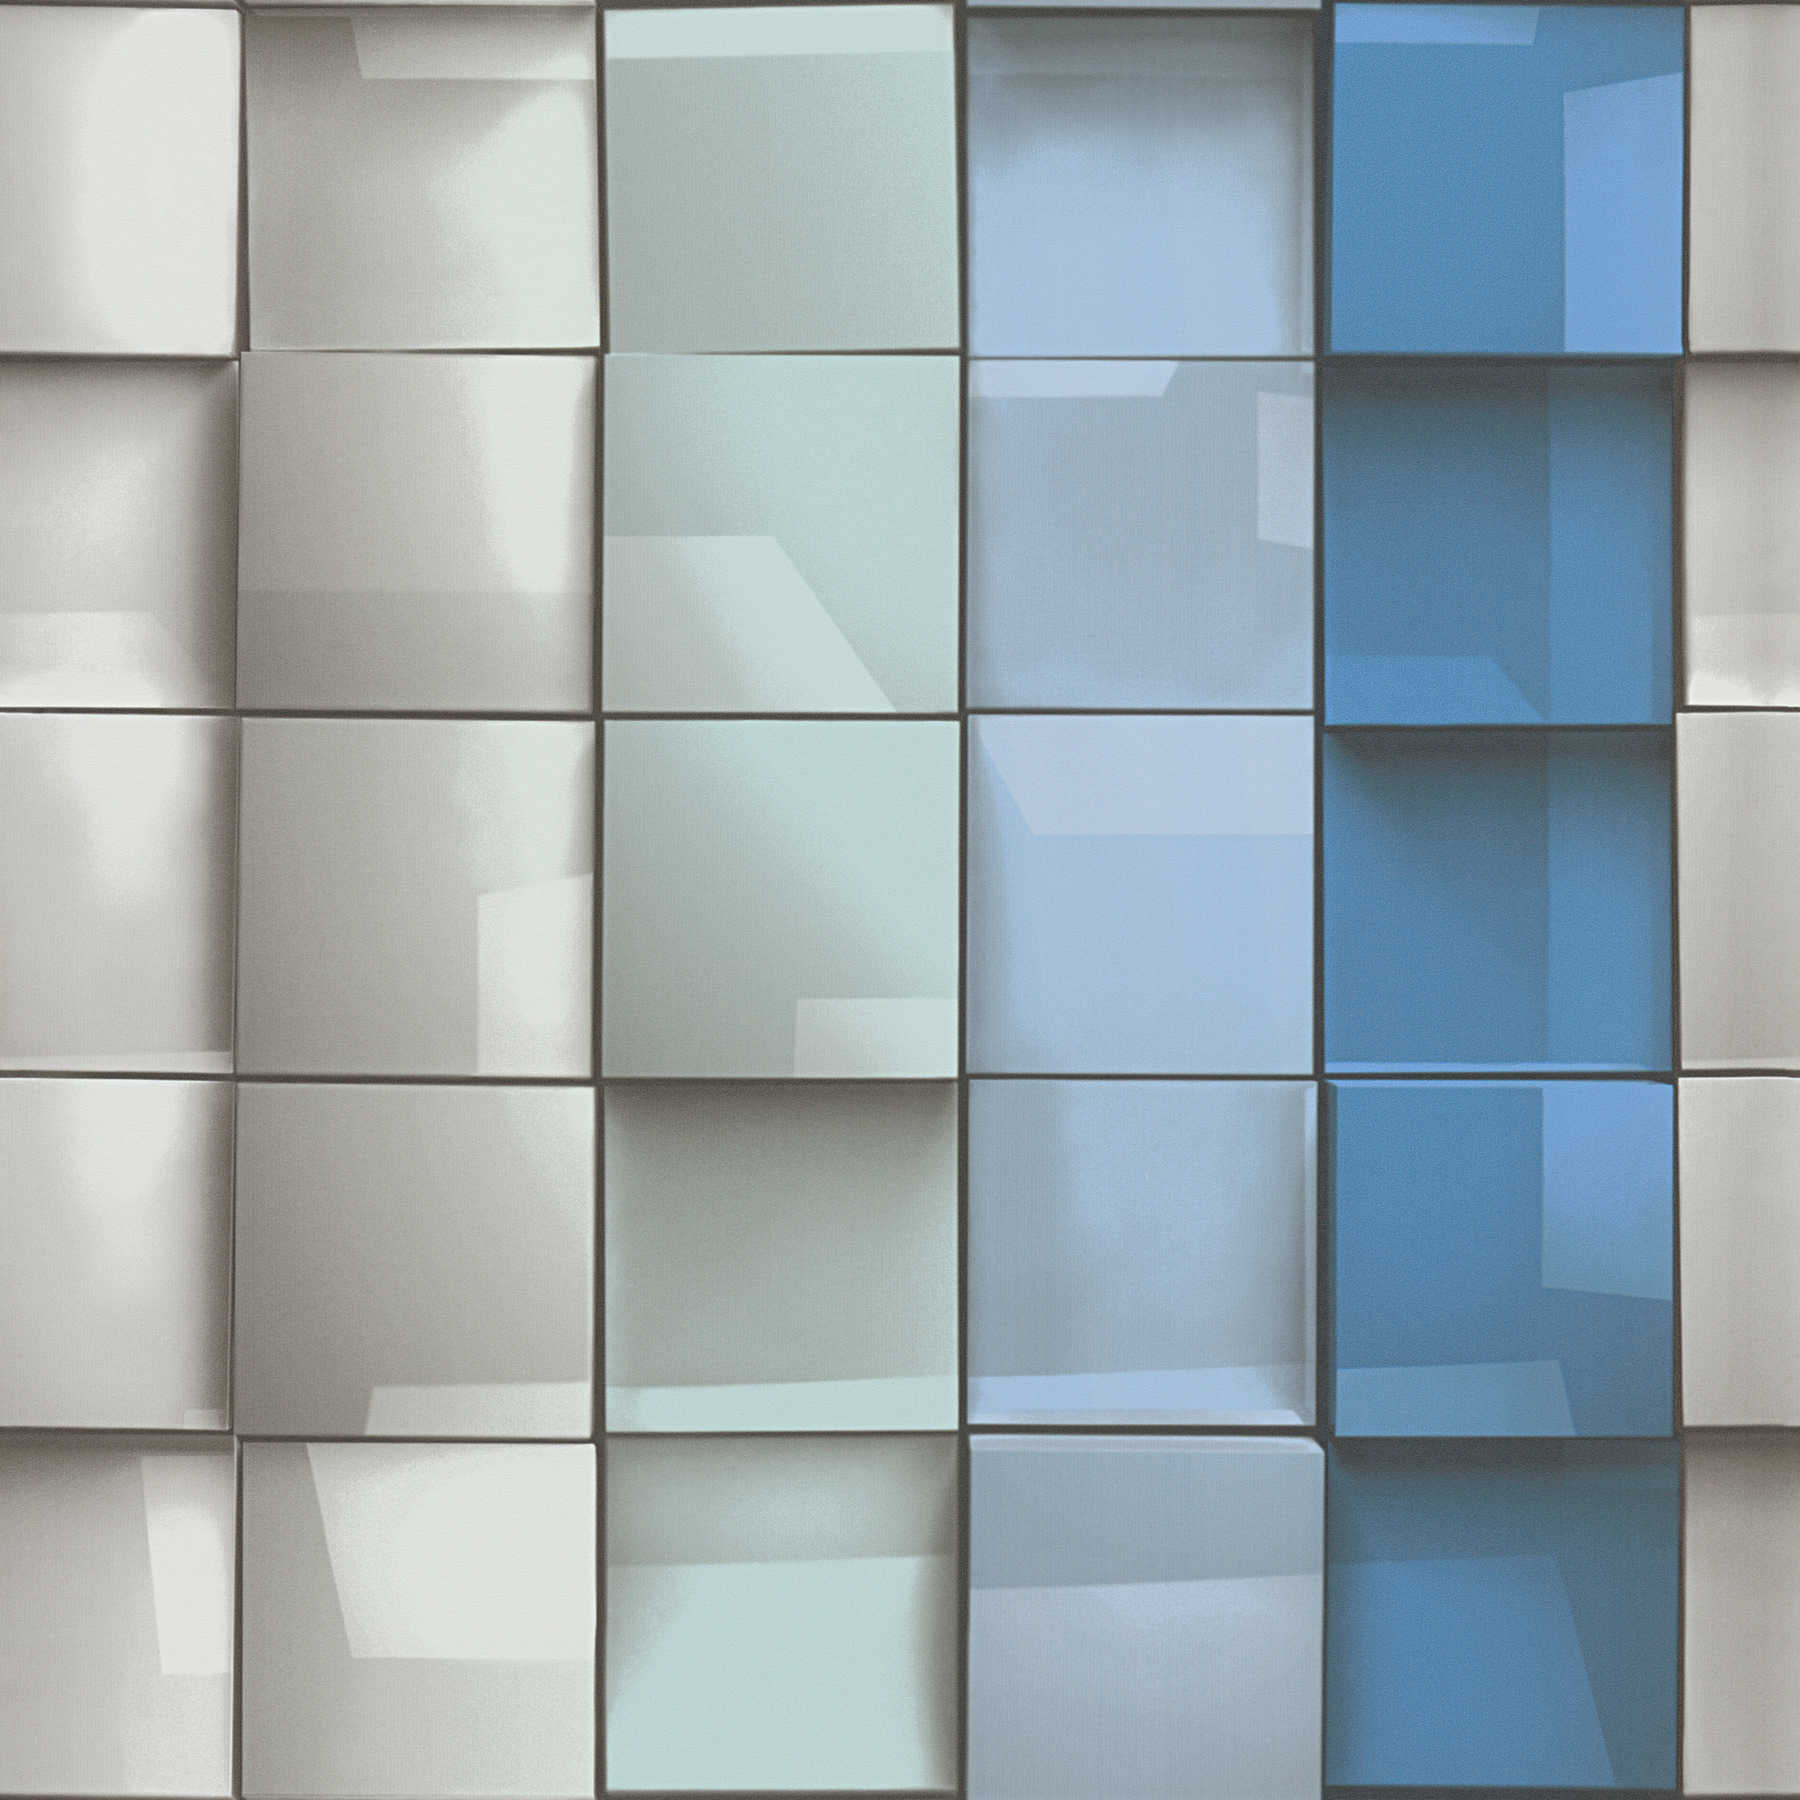         3D Tapete mit Quader Motiv – Blau, Grau, Grün
    